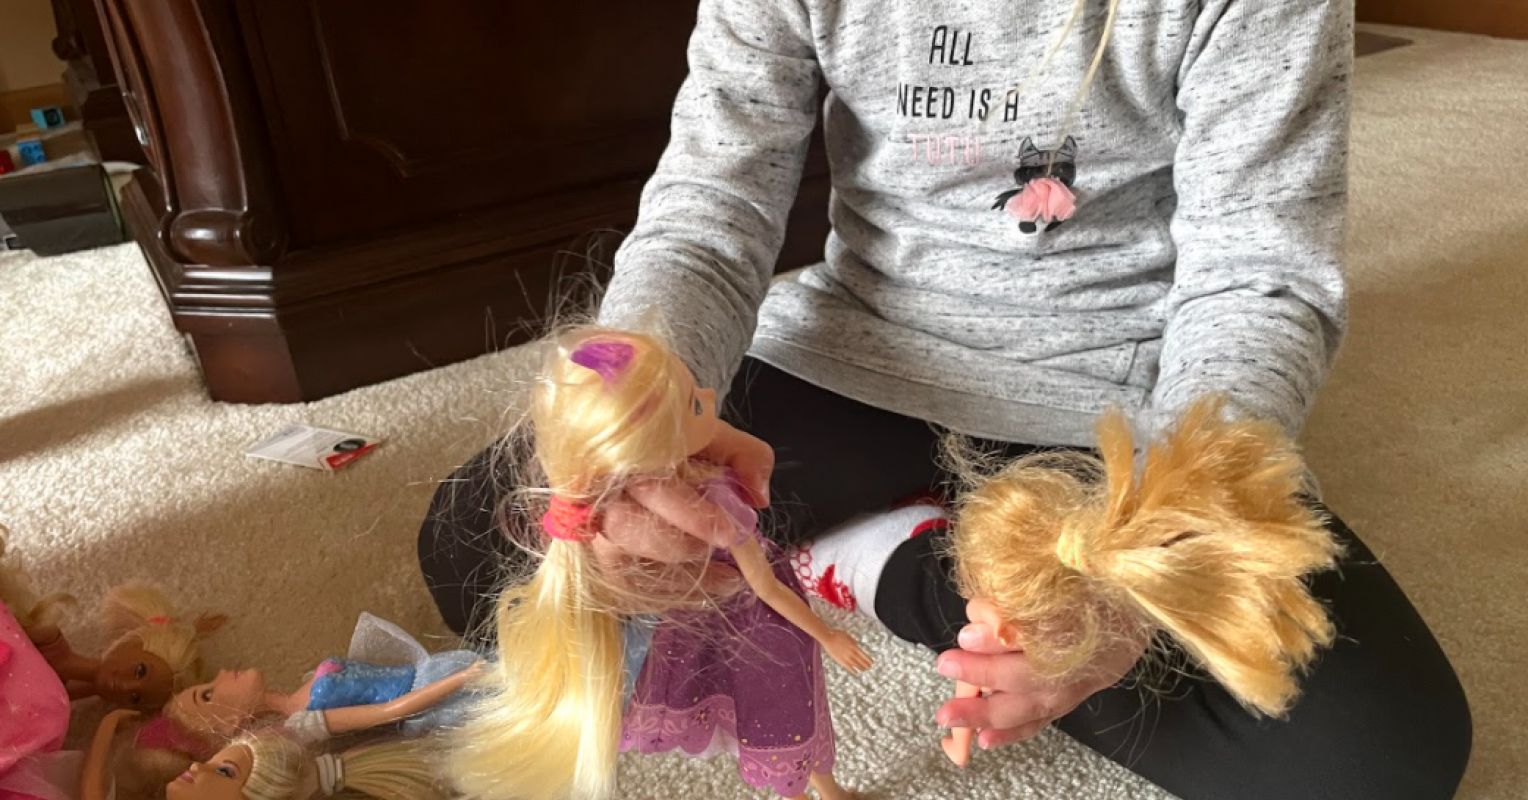 Weird Barbie Bad Hair Day Doll DIY Used No Clohtes 